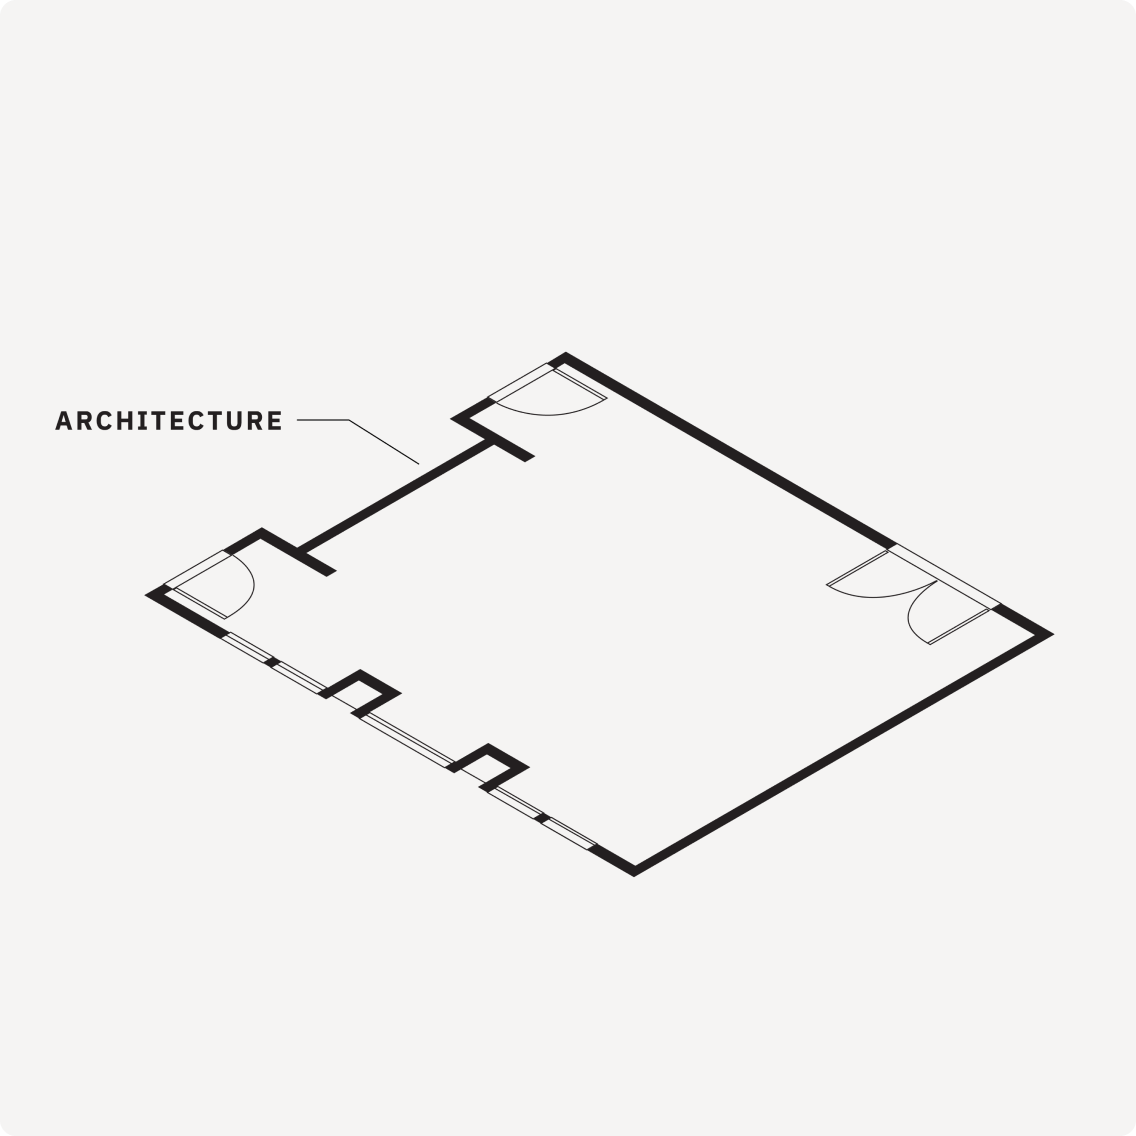 CAD - Architecture